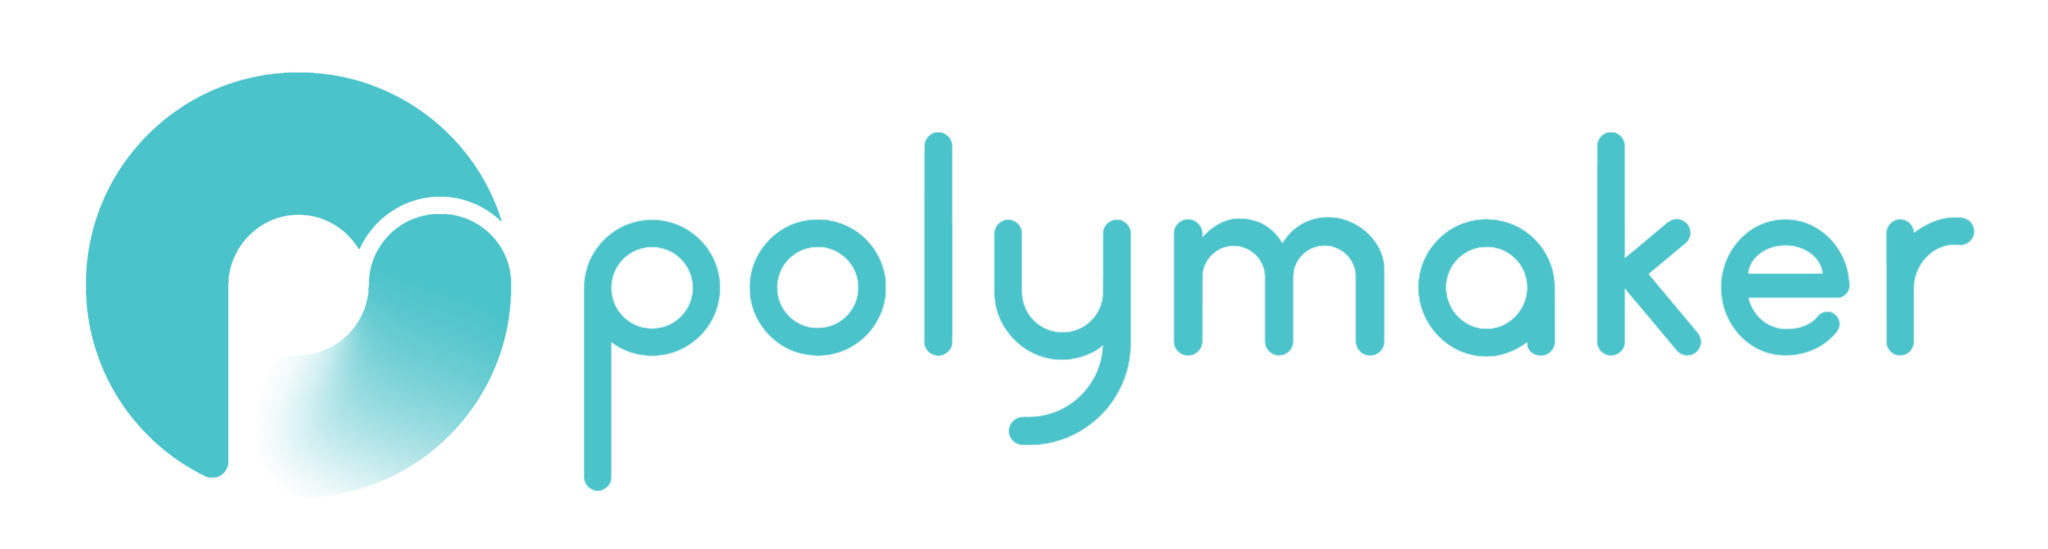 polymaker logo